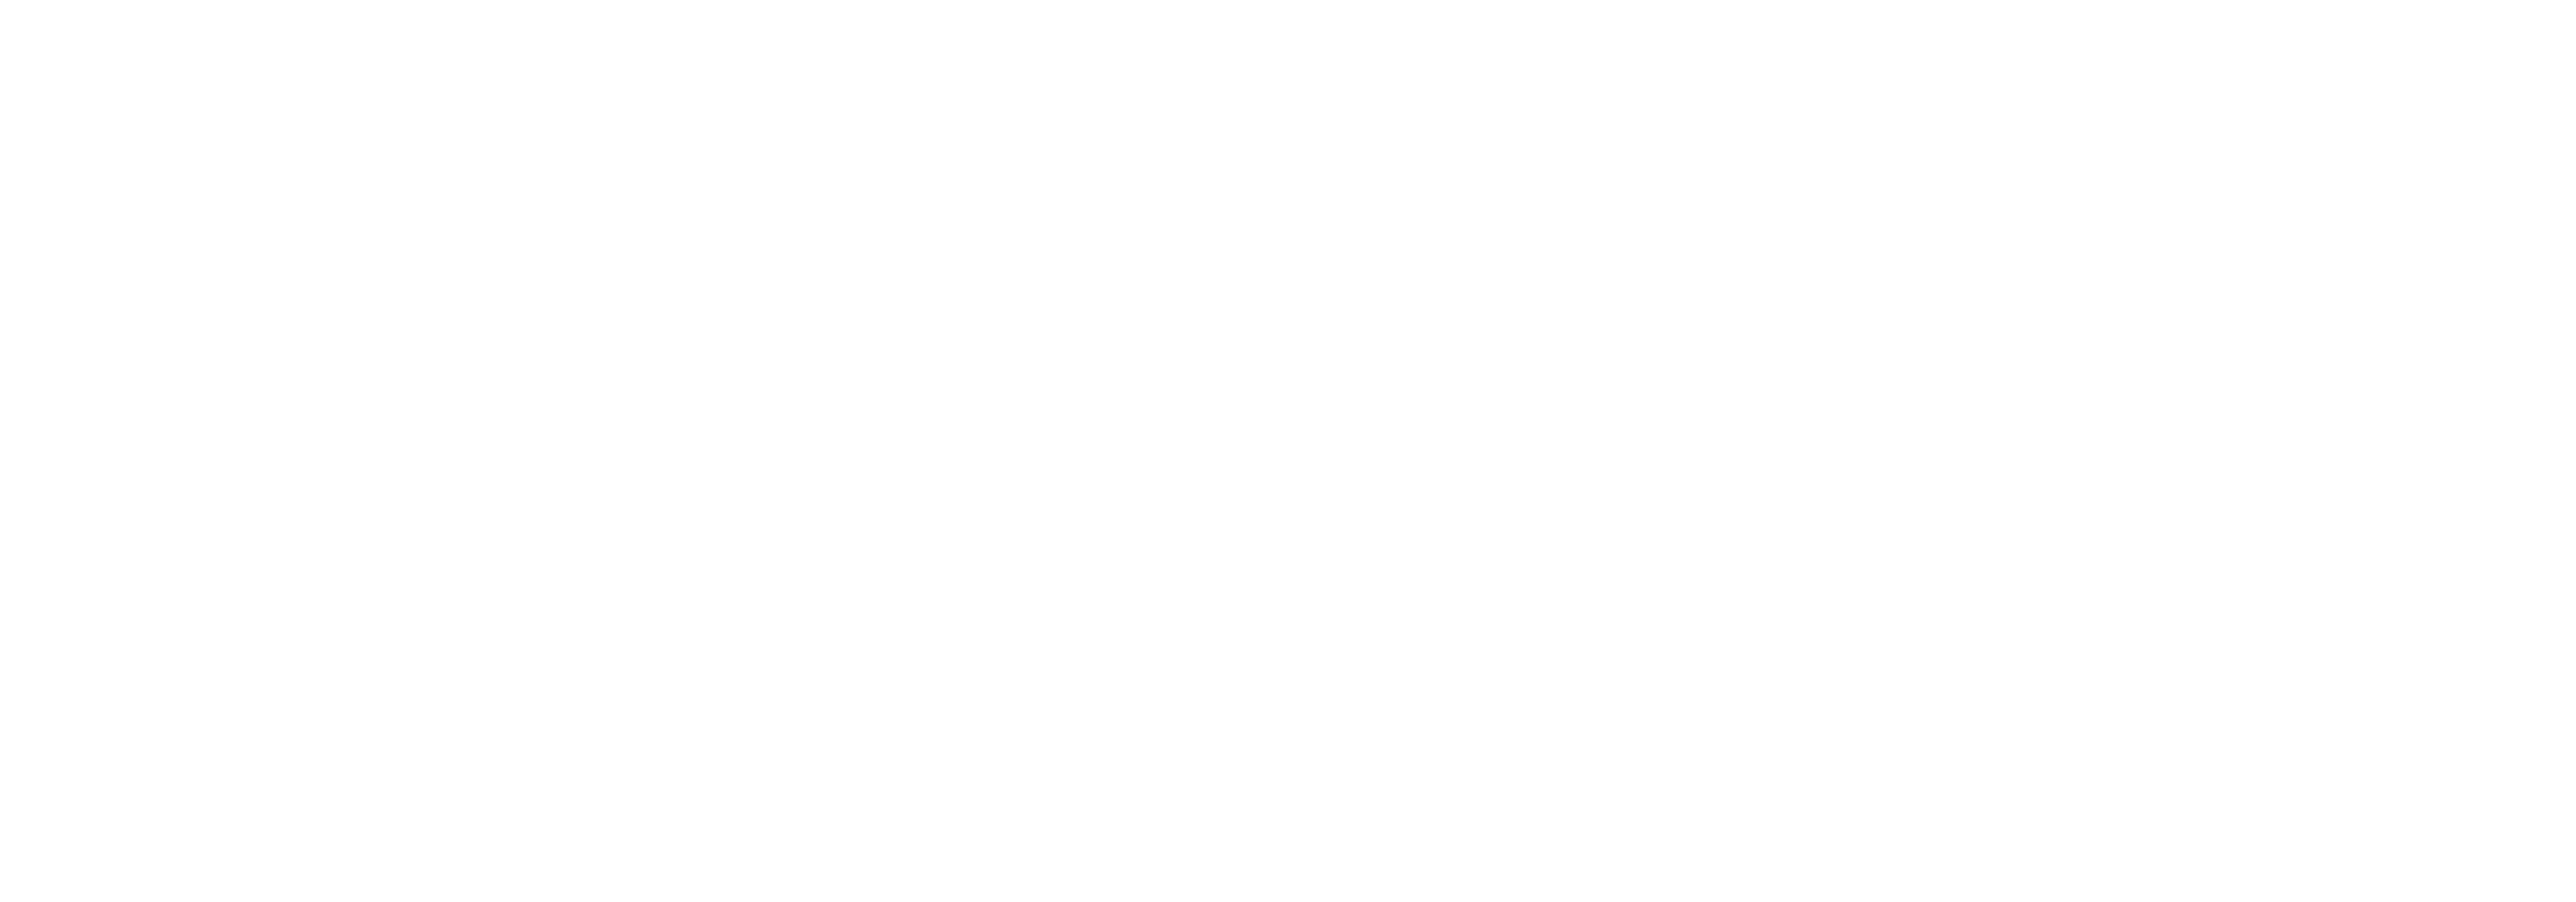 Meadow Creek Apartments Logo